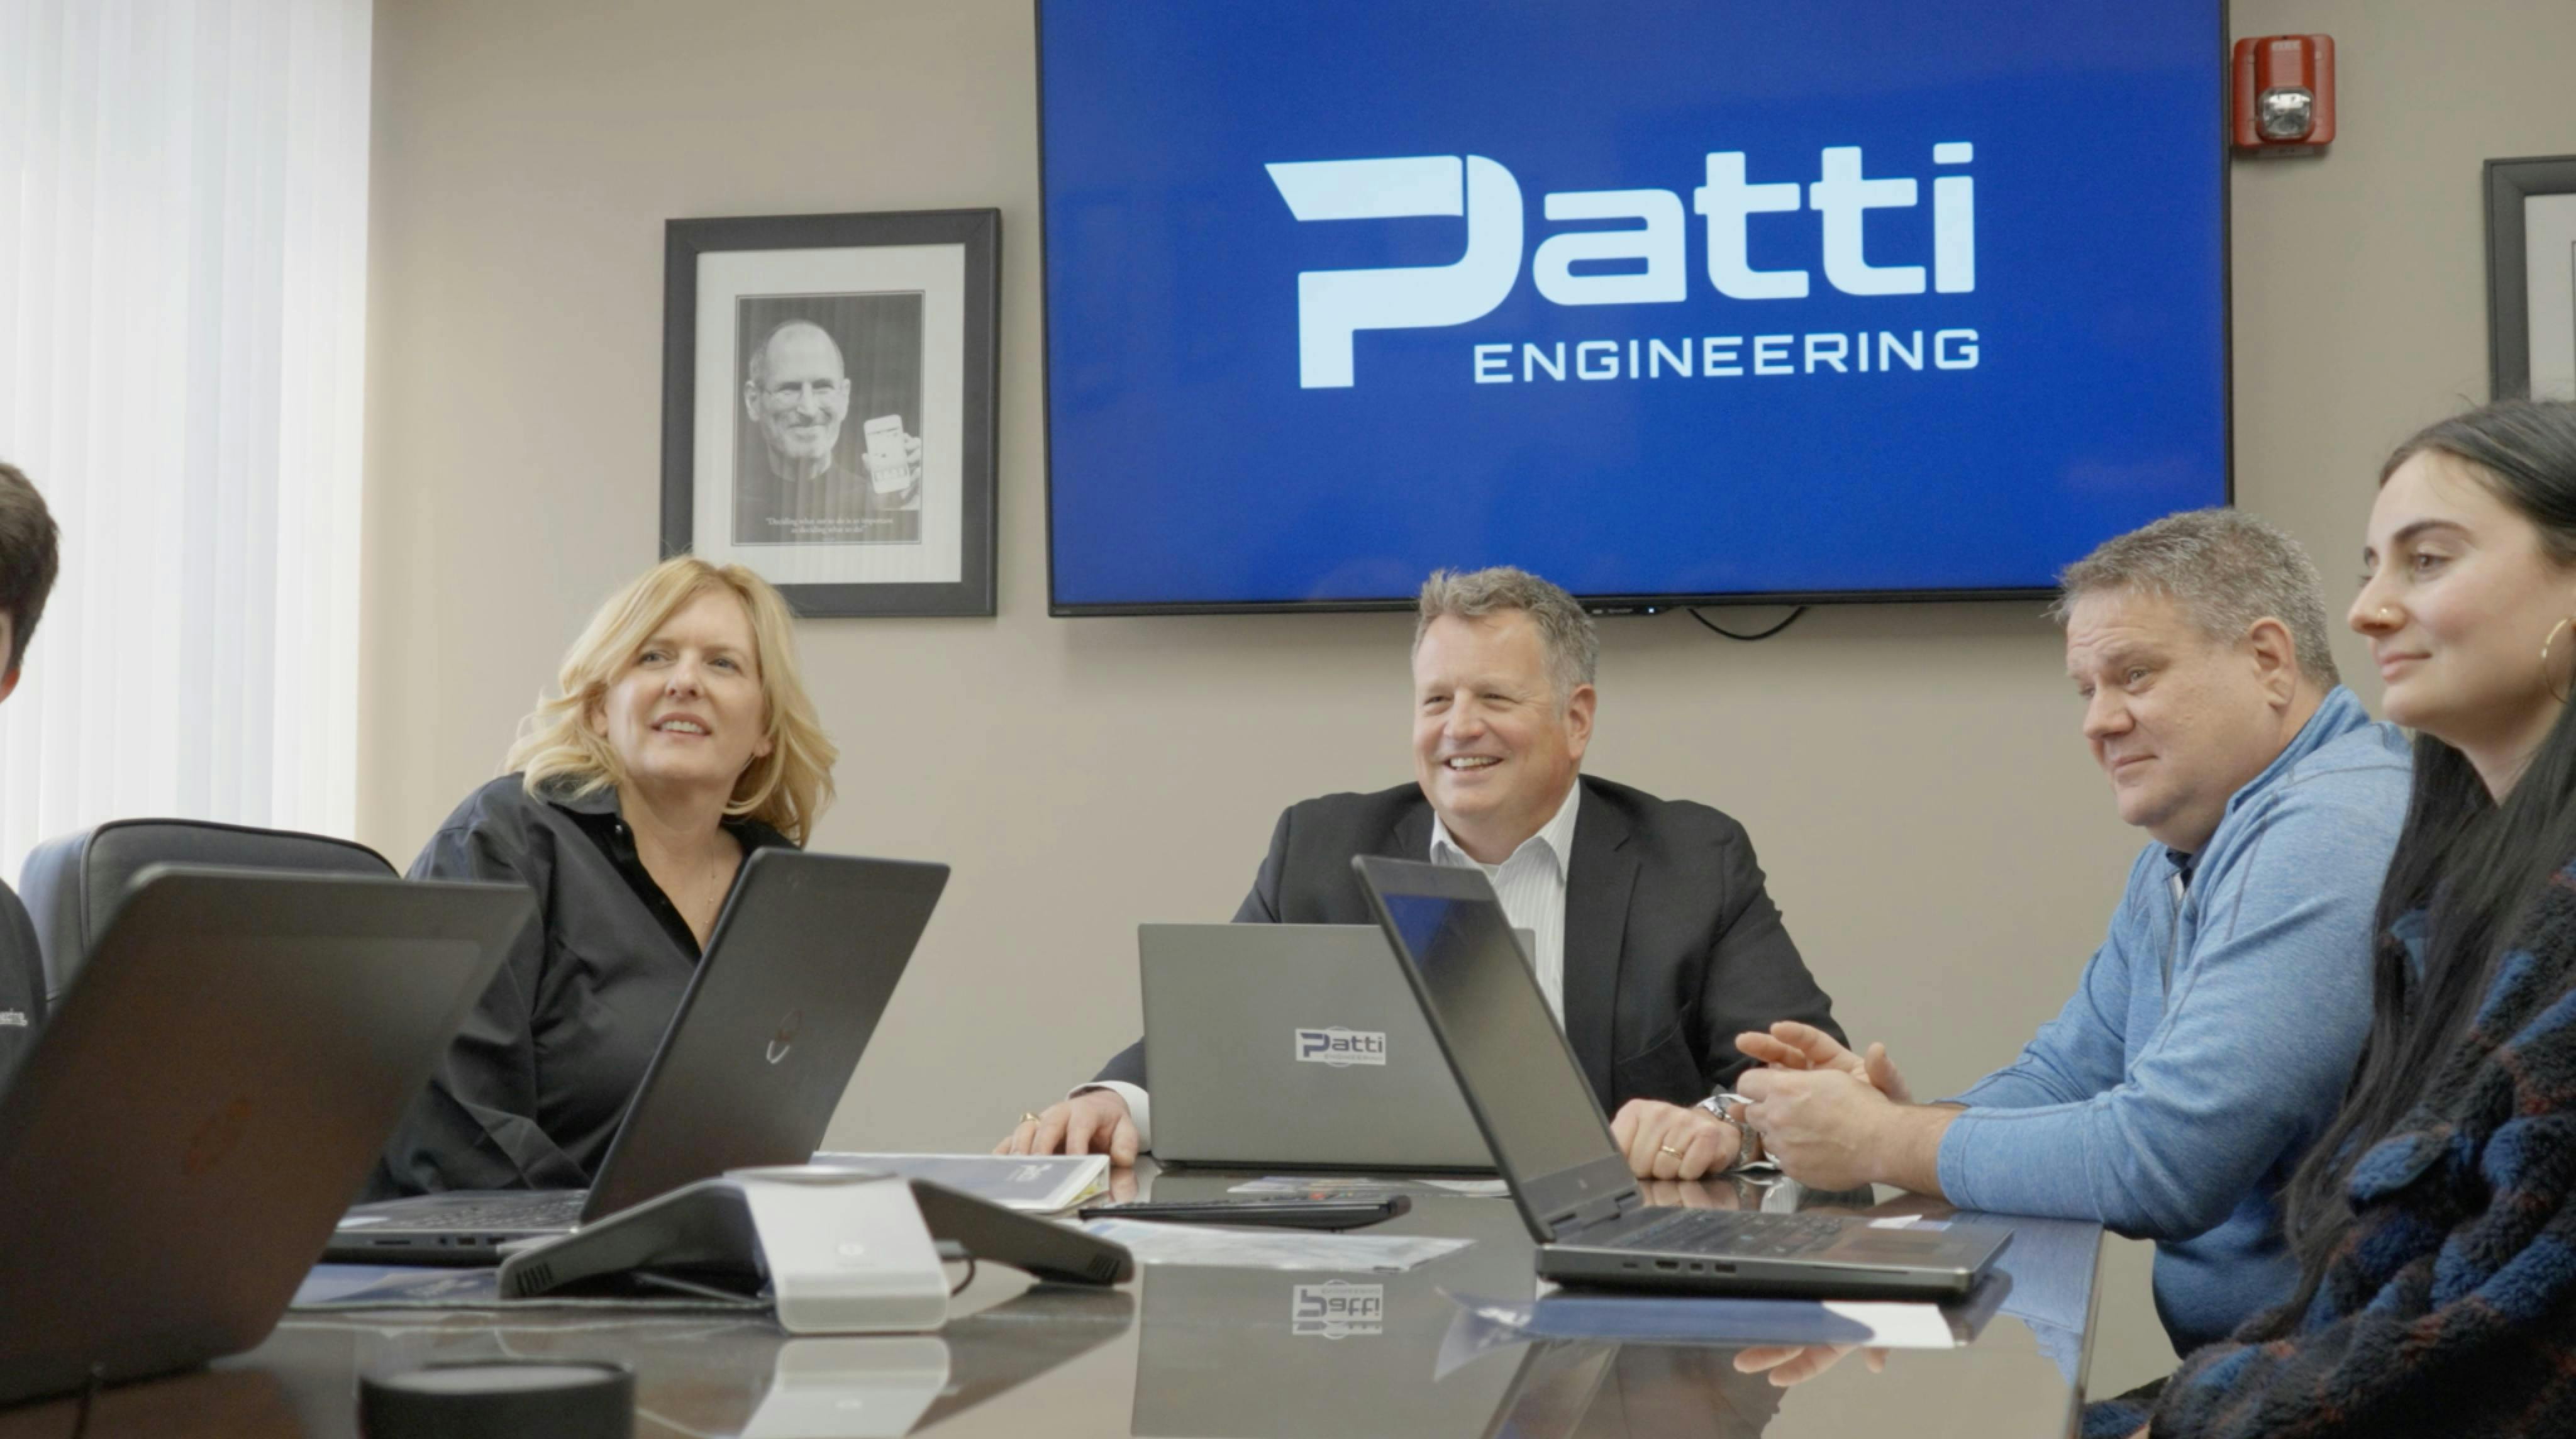 Patti Engineering group shot